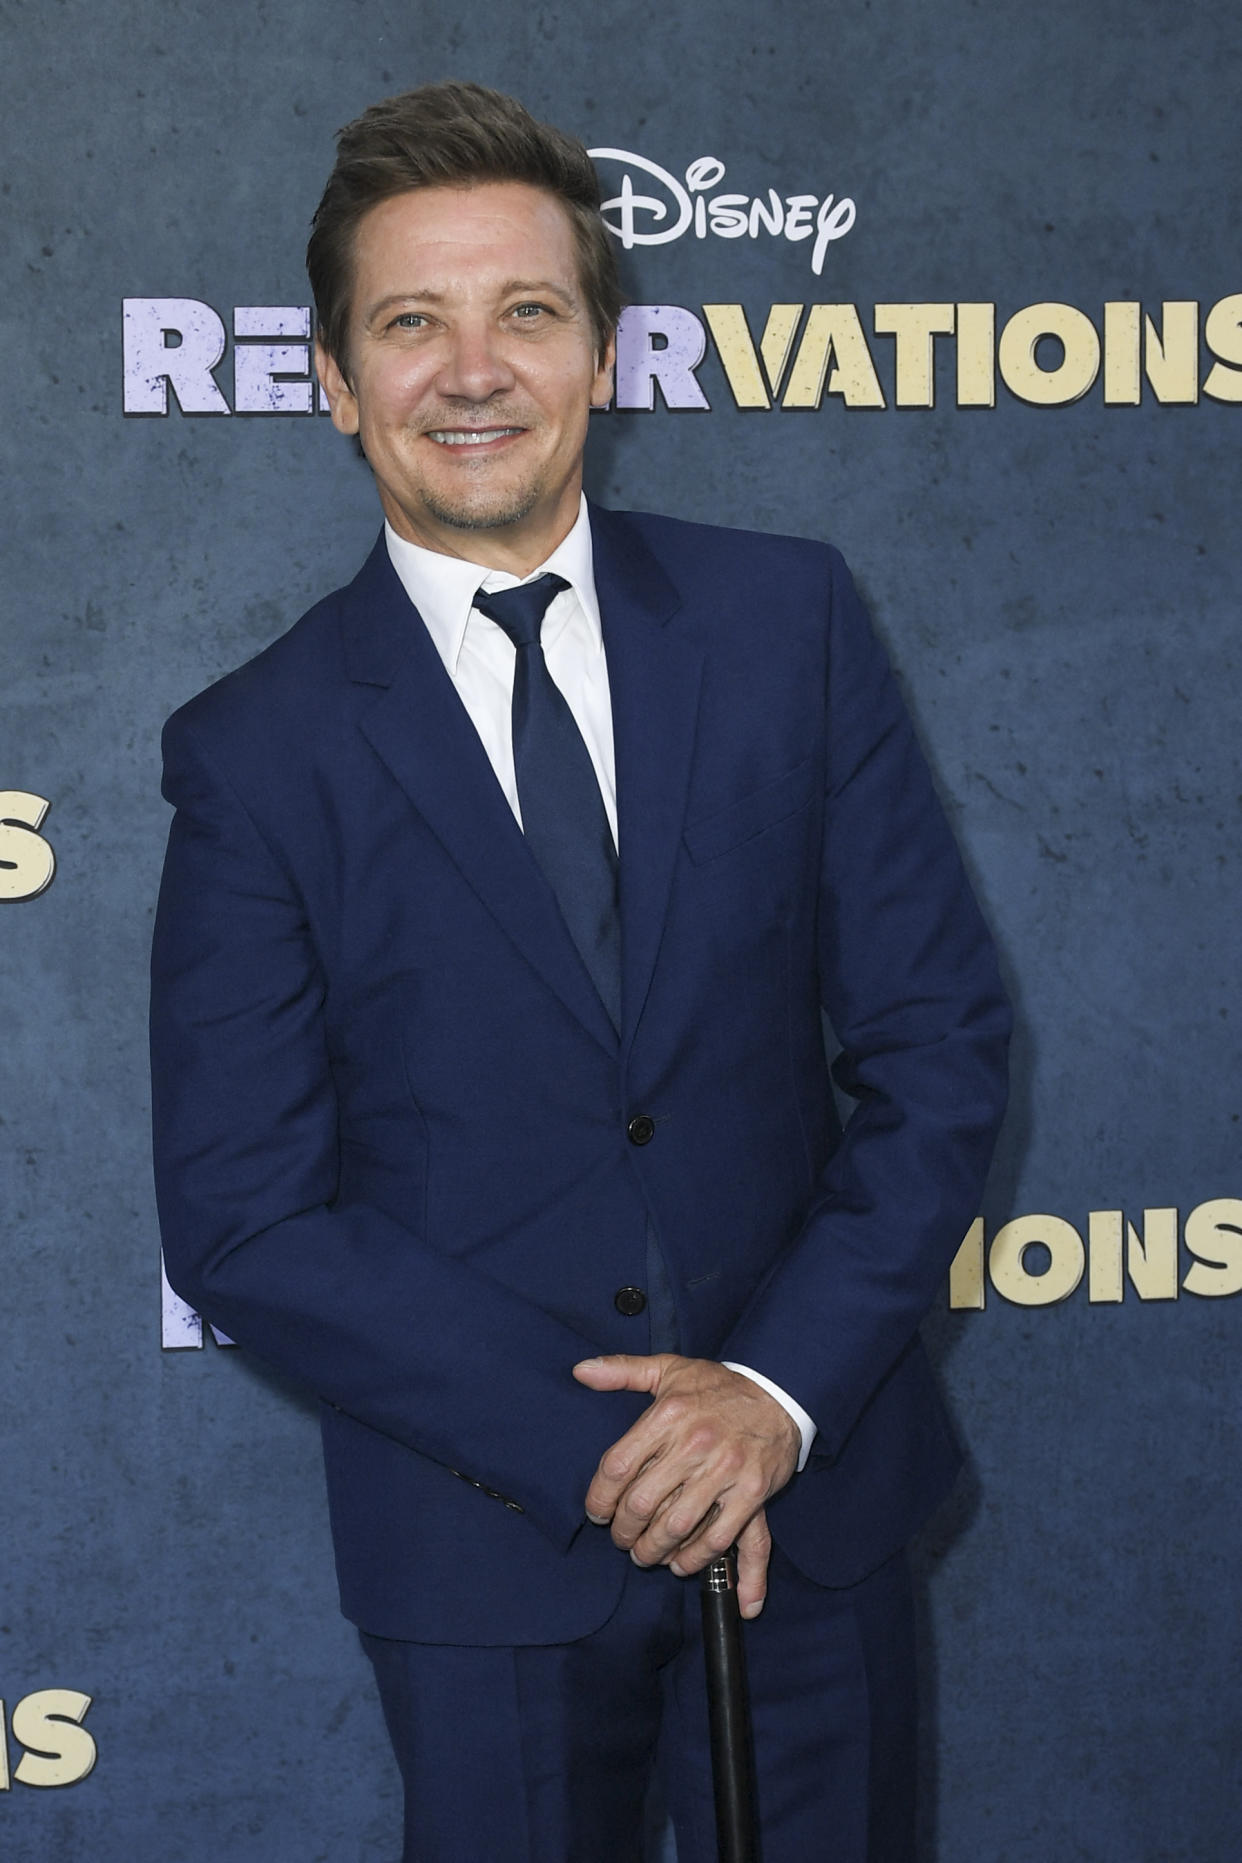 Host & Executive Producer Jeremy Renner arrives for the red carpet premiere of Disney+ original series 